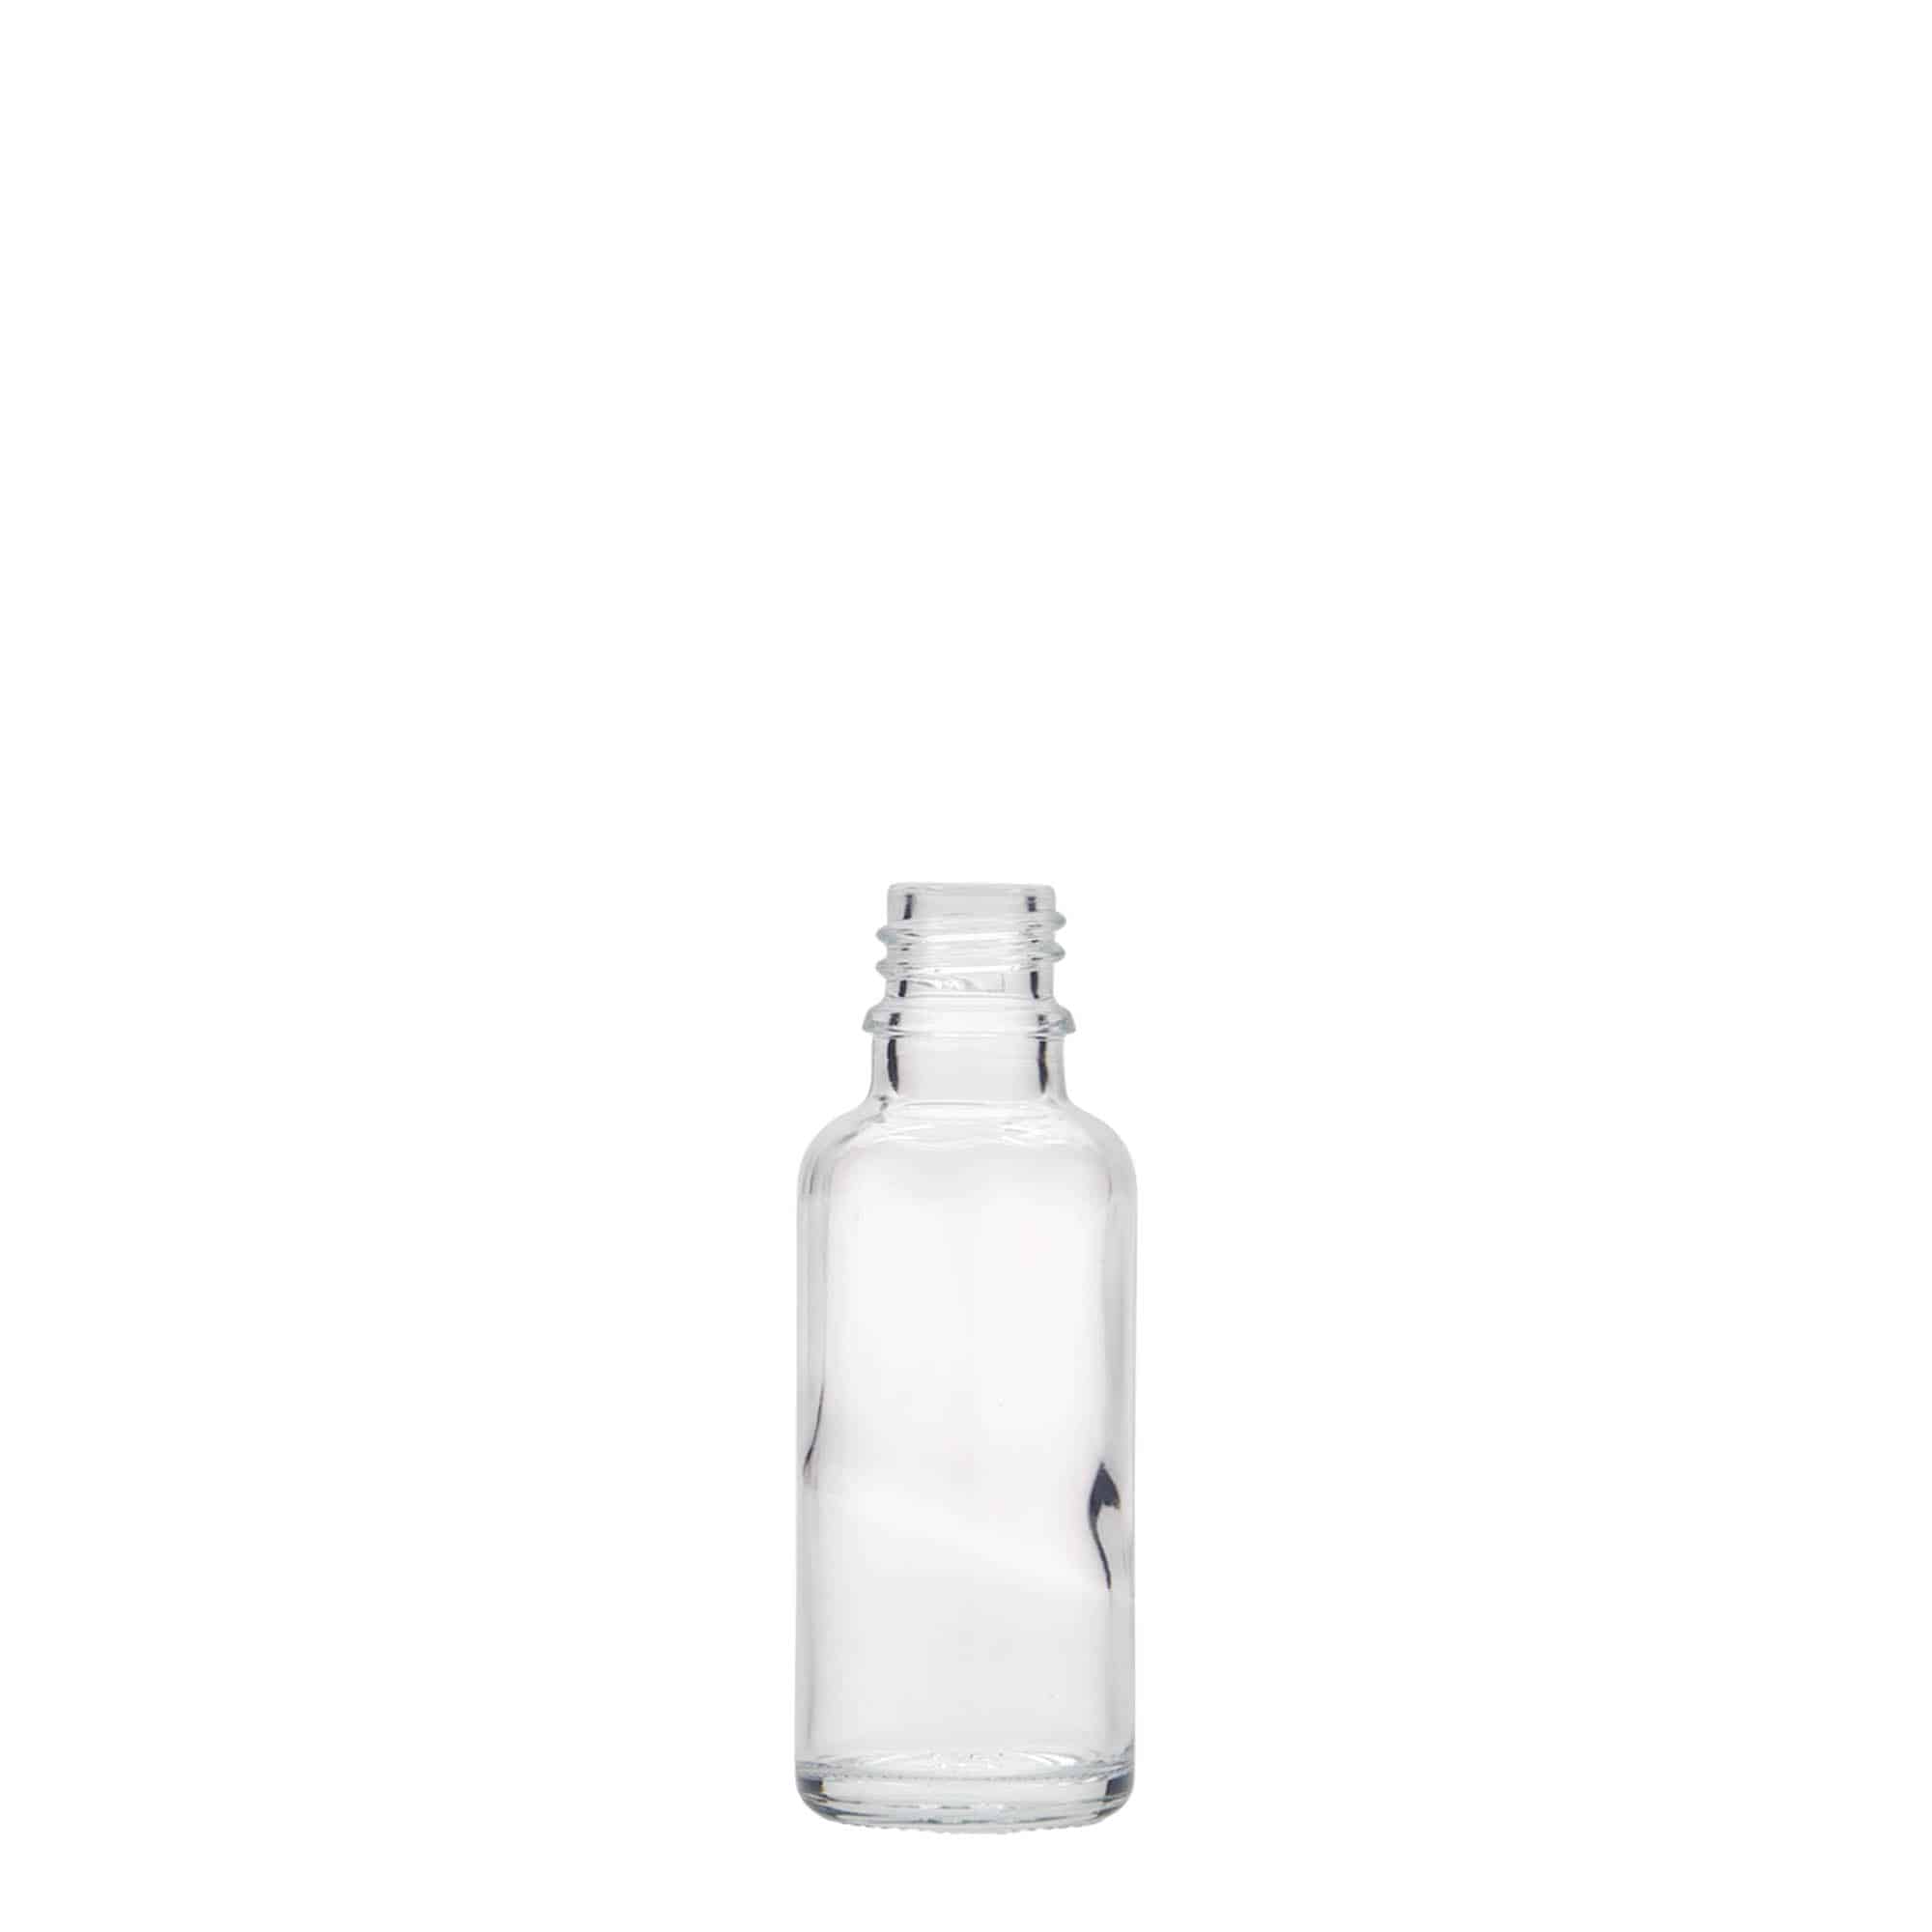 30 ml medicine bottle, glass, closure: DIN 18